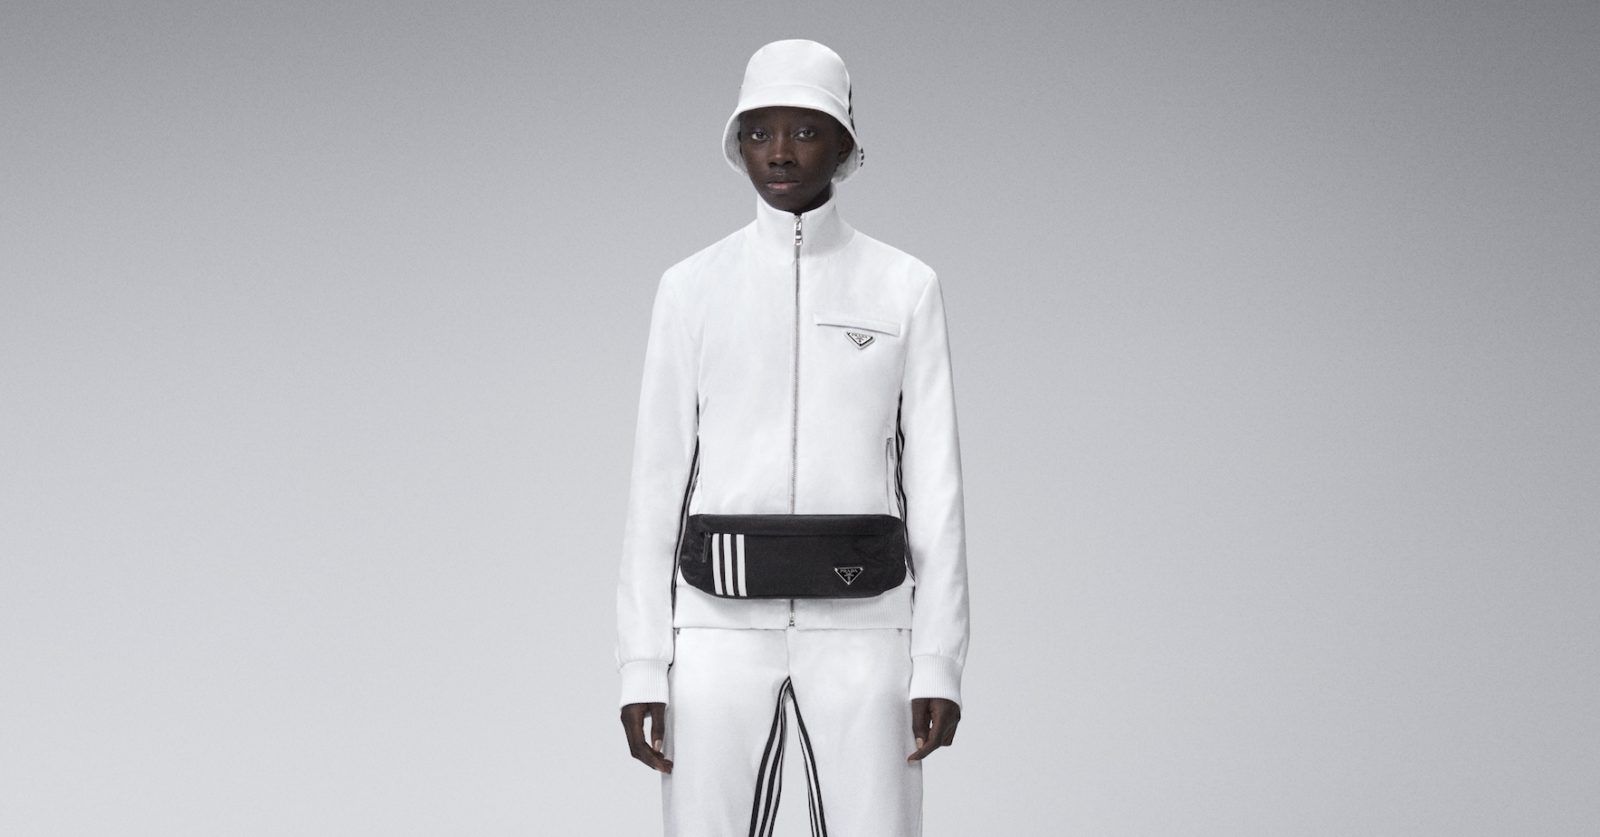 Prada and Adidas will take their Re-Nylon collection into the metaverse